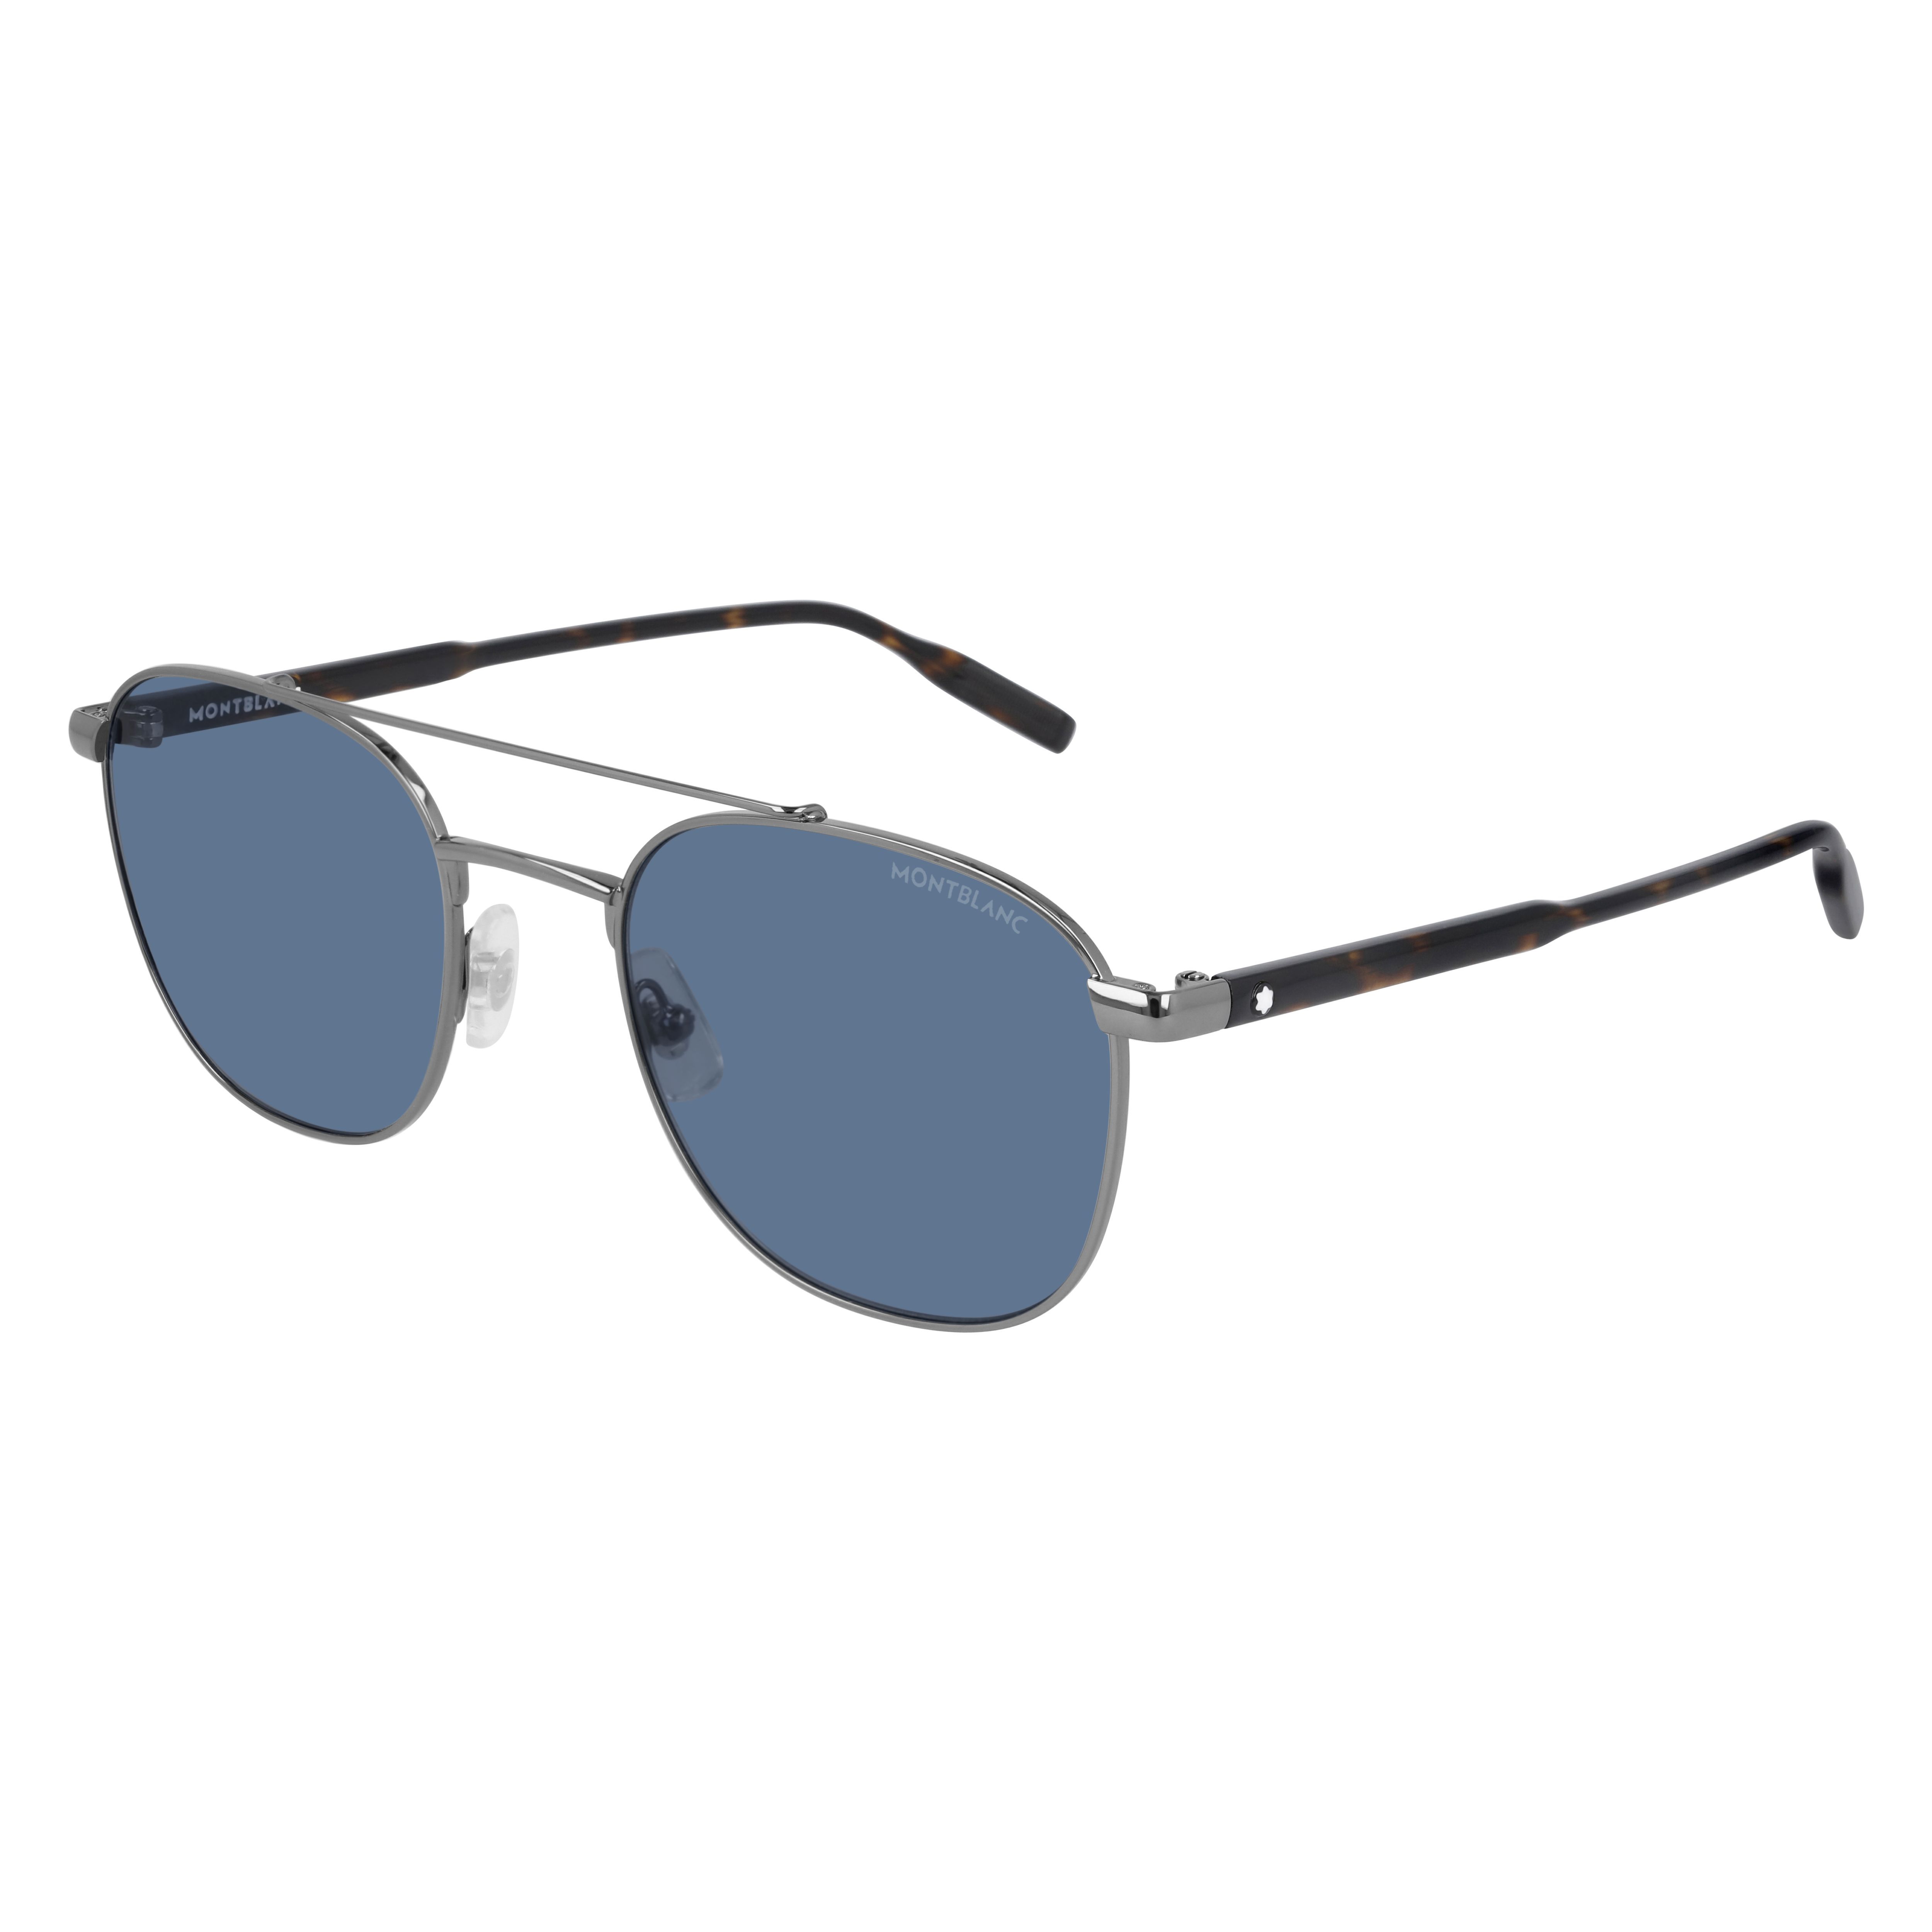 MB0114S Panthos Sunglasses 002 - size 54